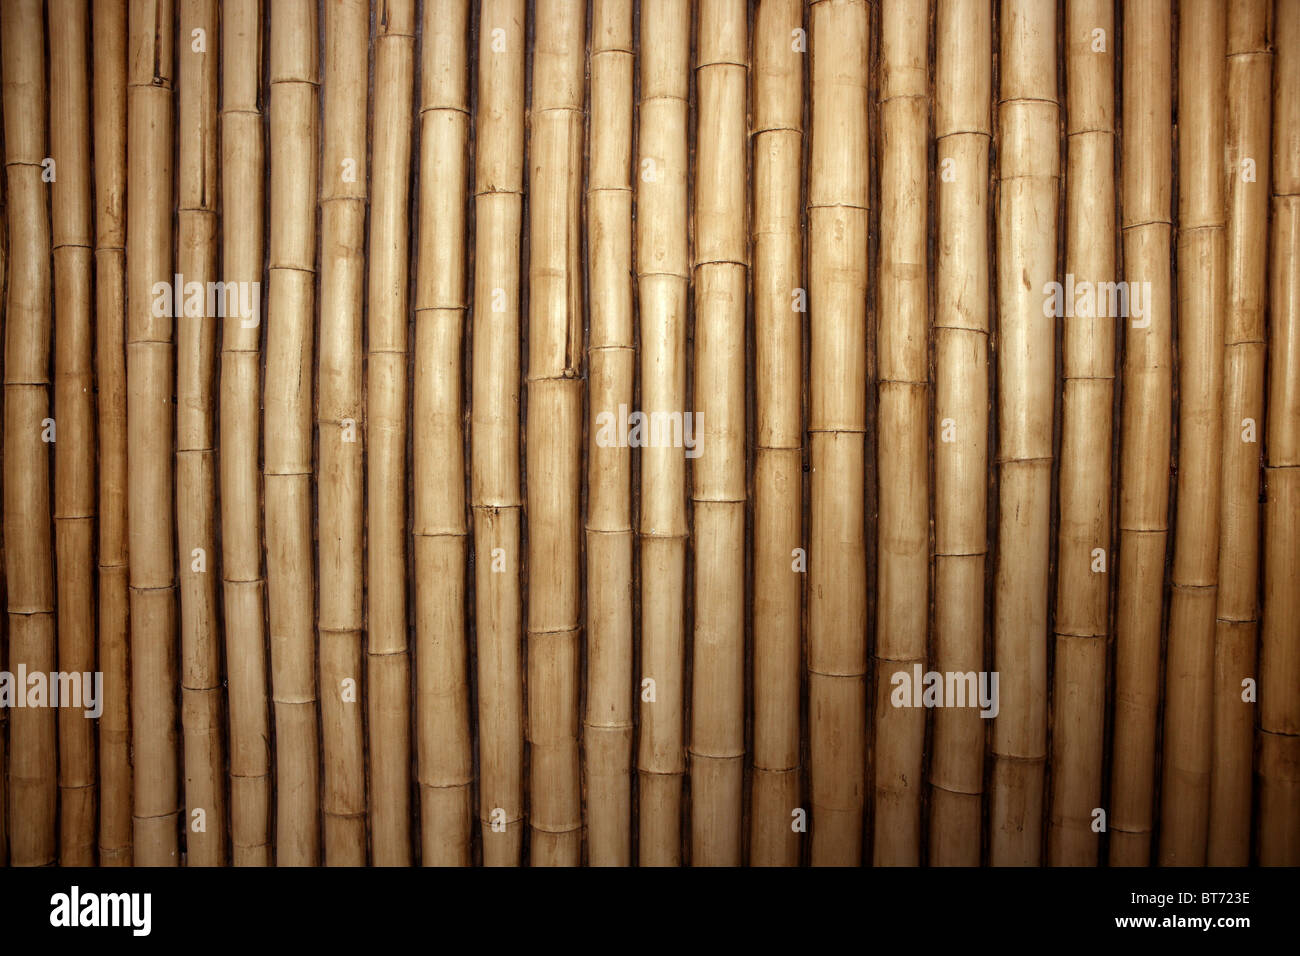 Bamboo cane row arrangement background pattern Stock Photo